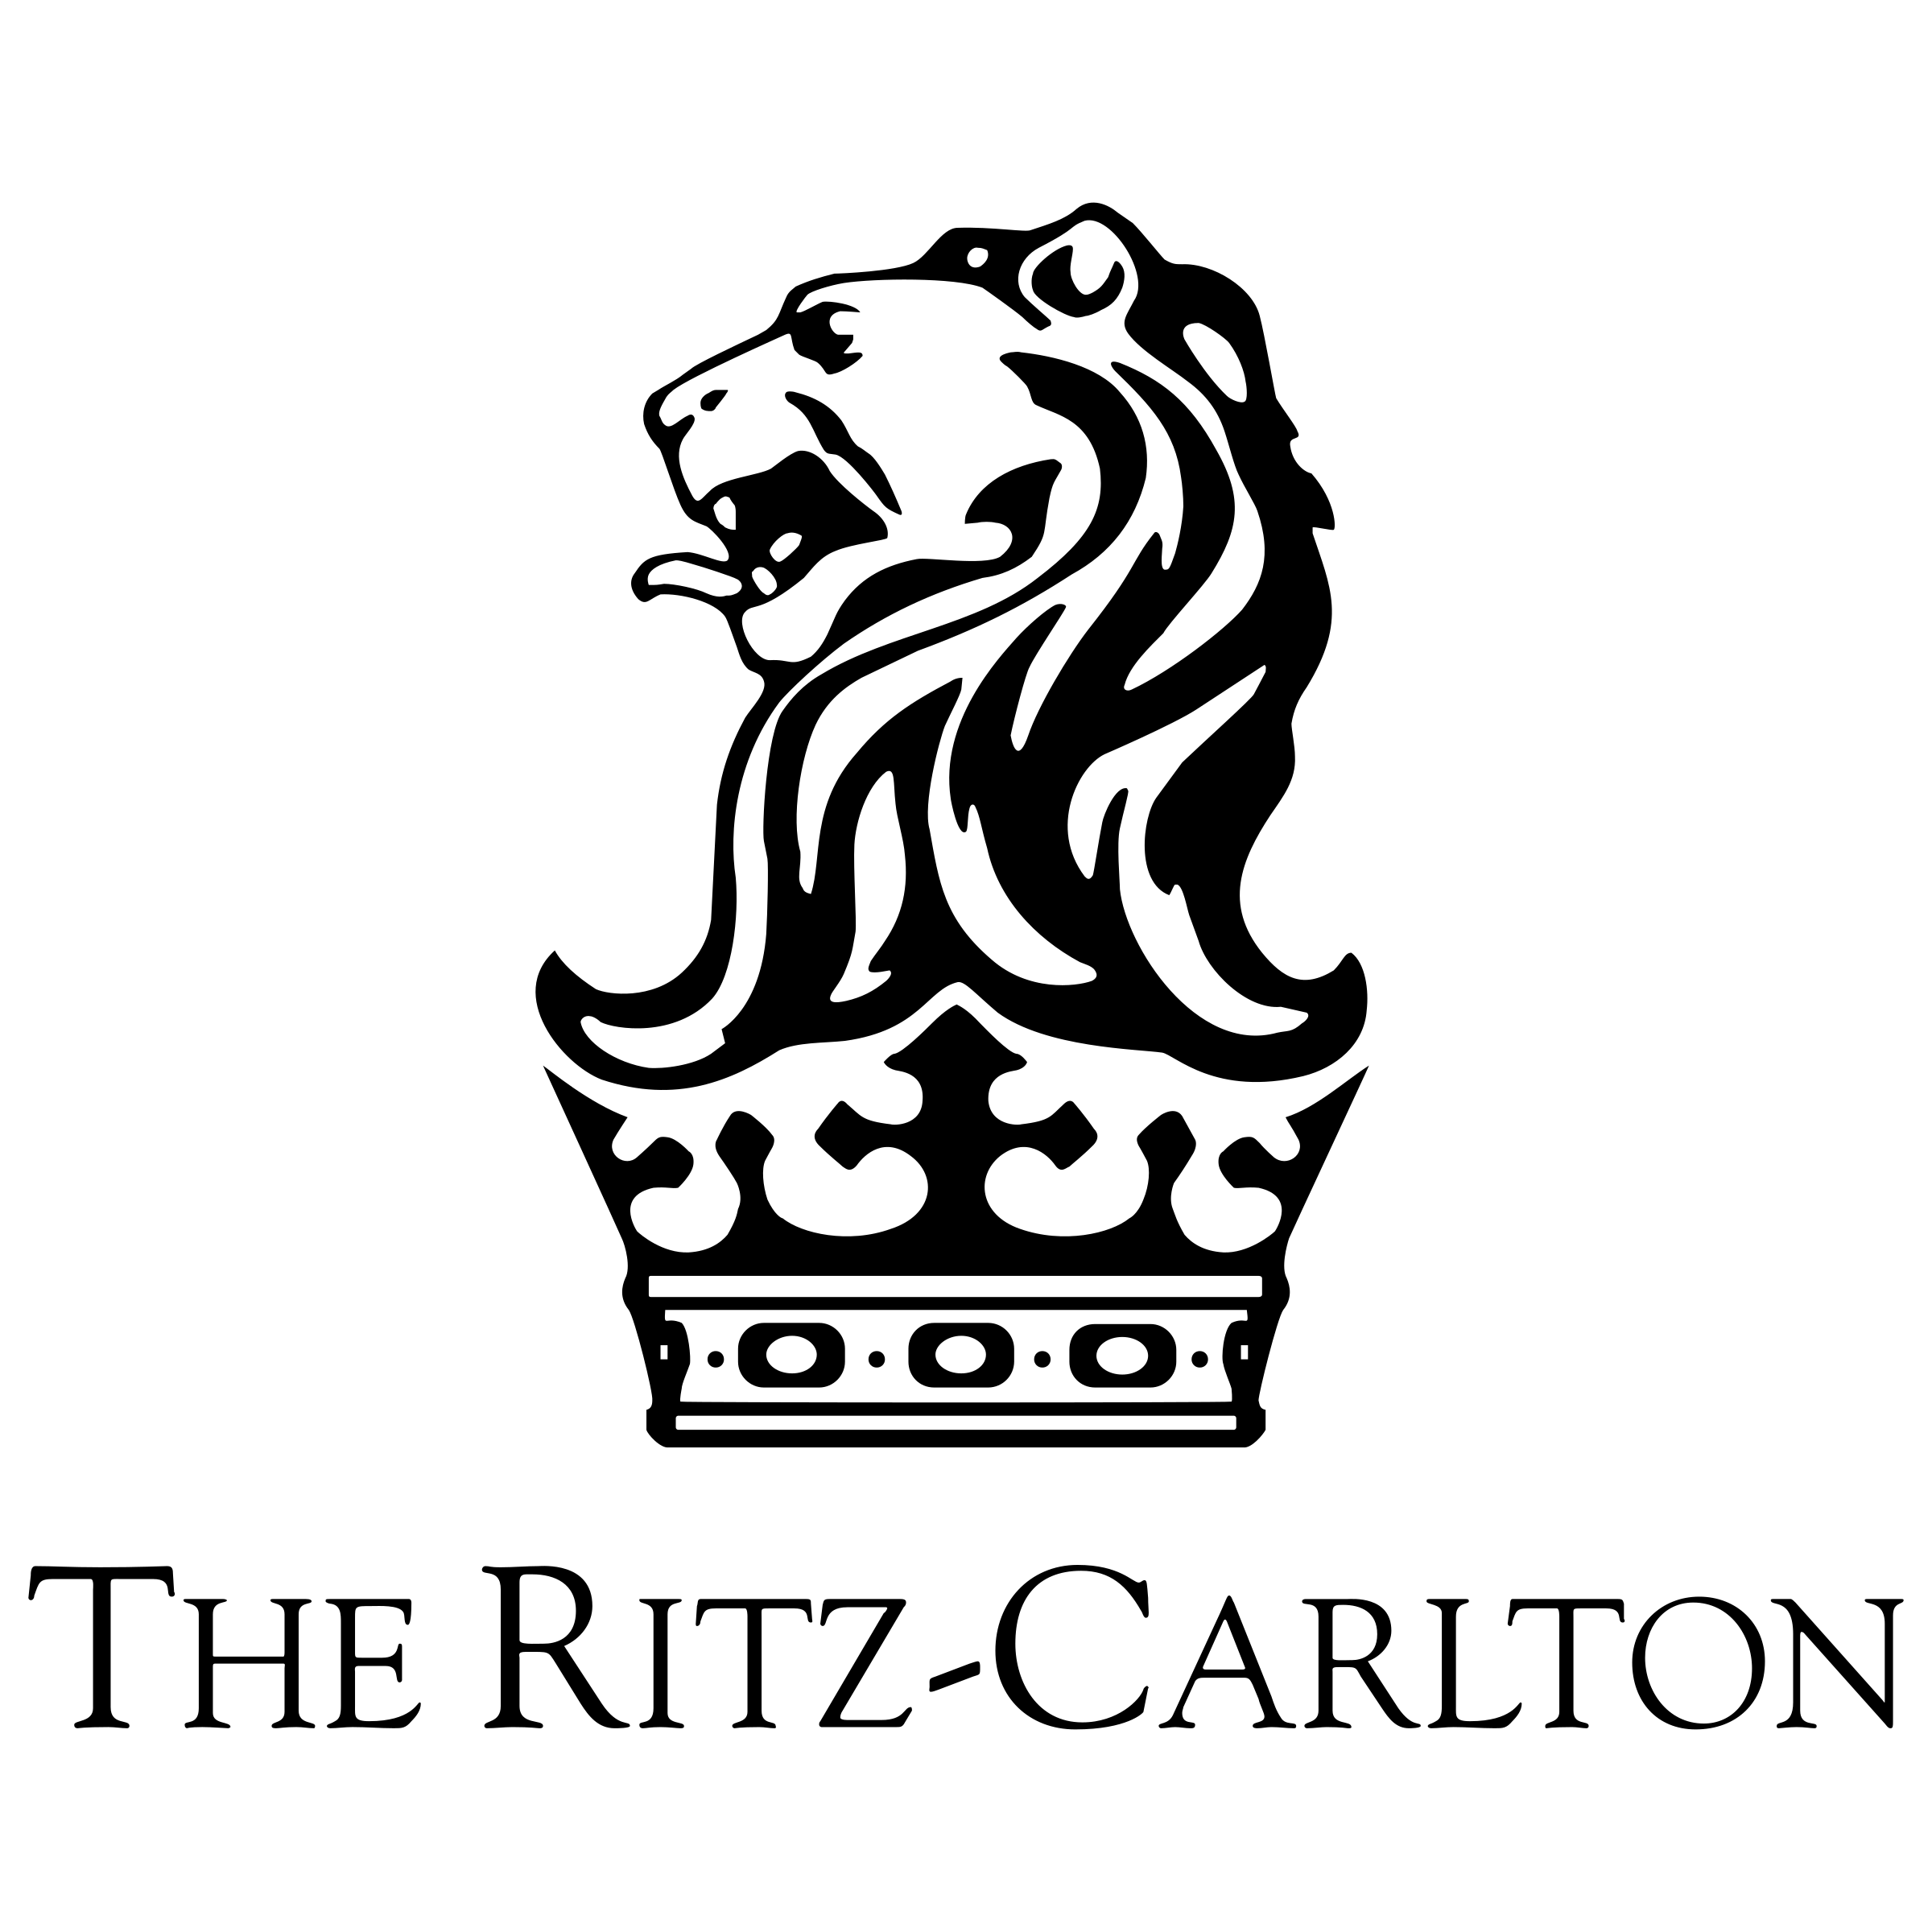 the-ritz-carlton-logo-png-transparent